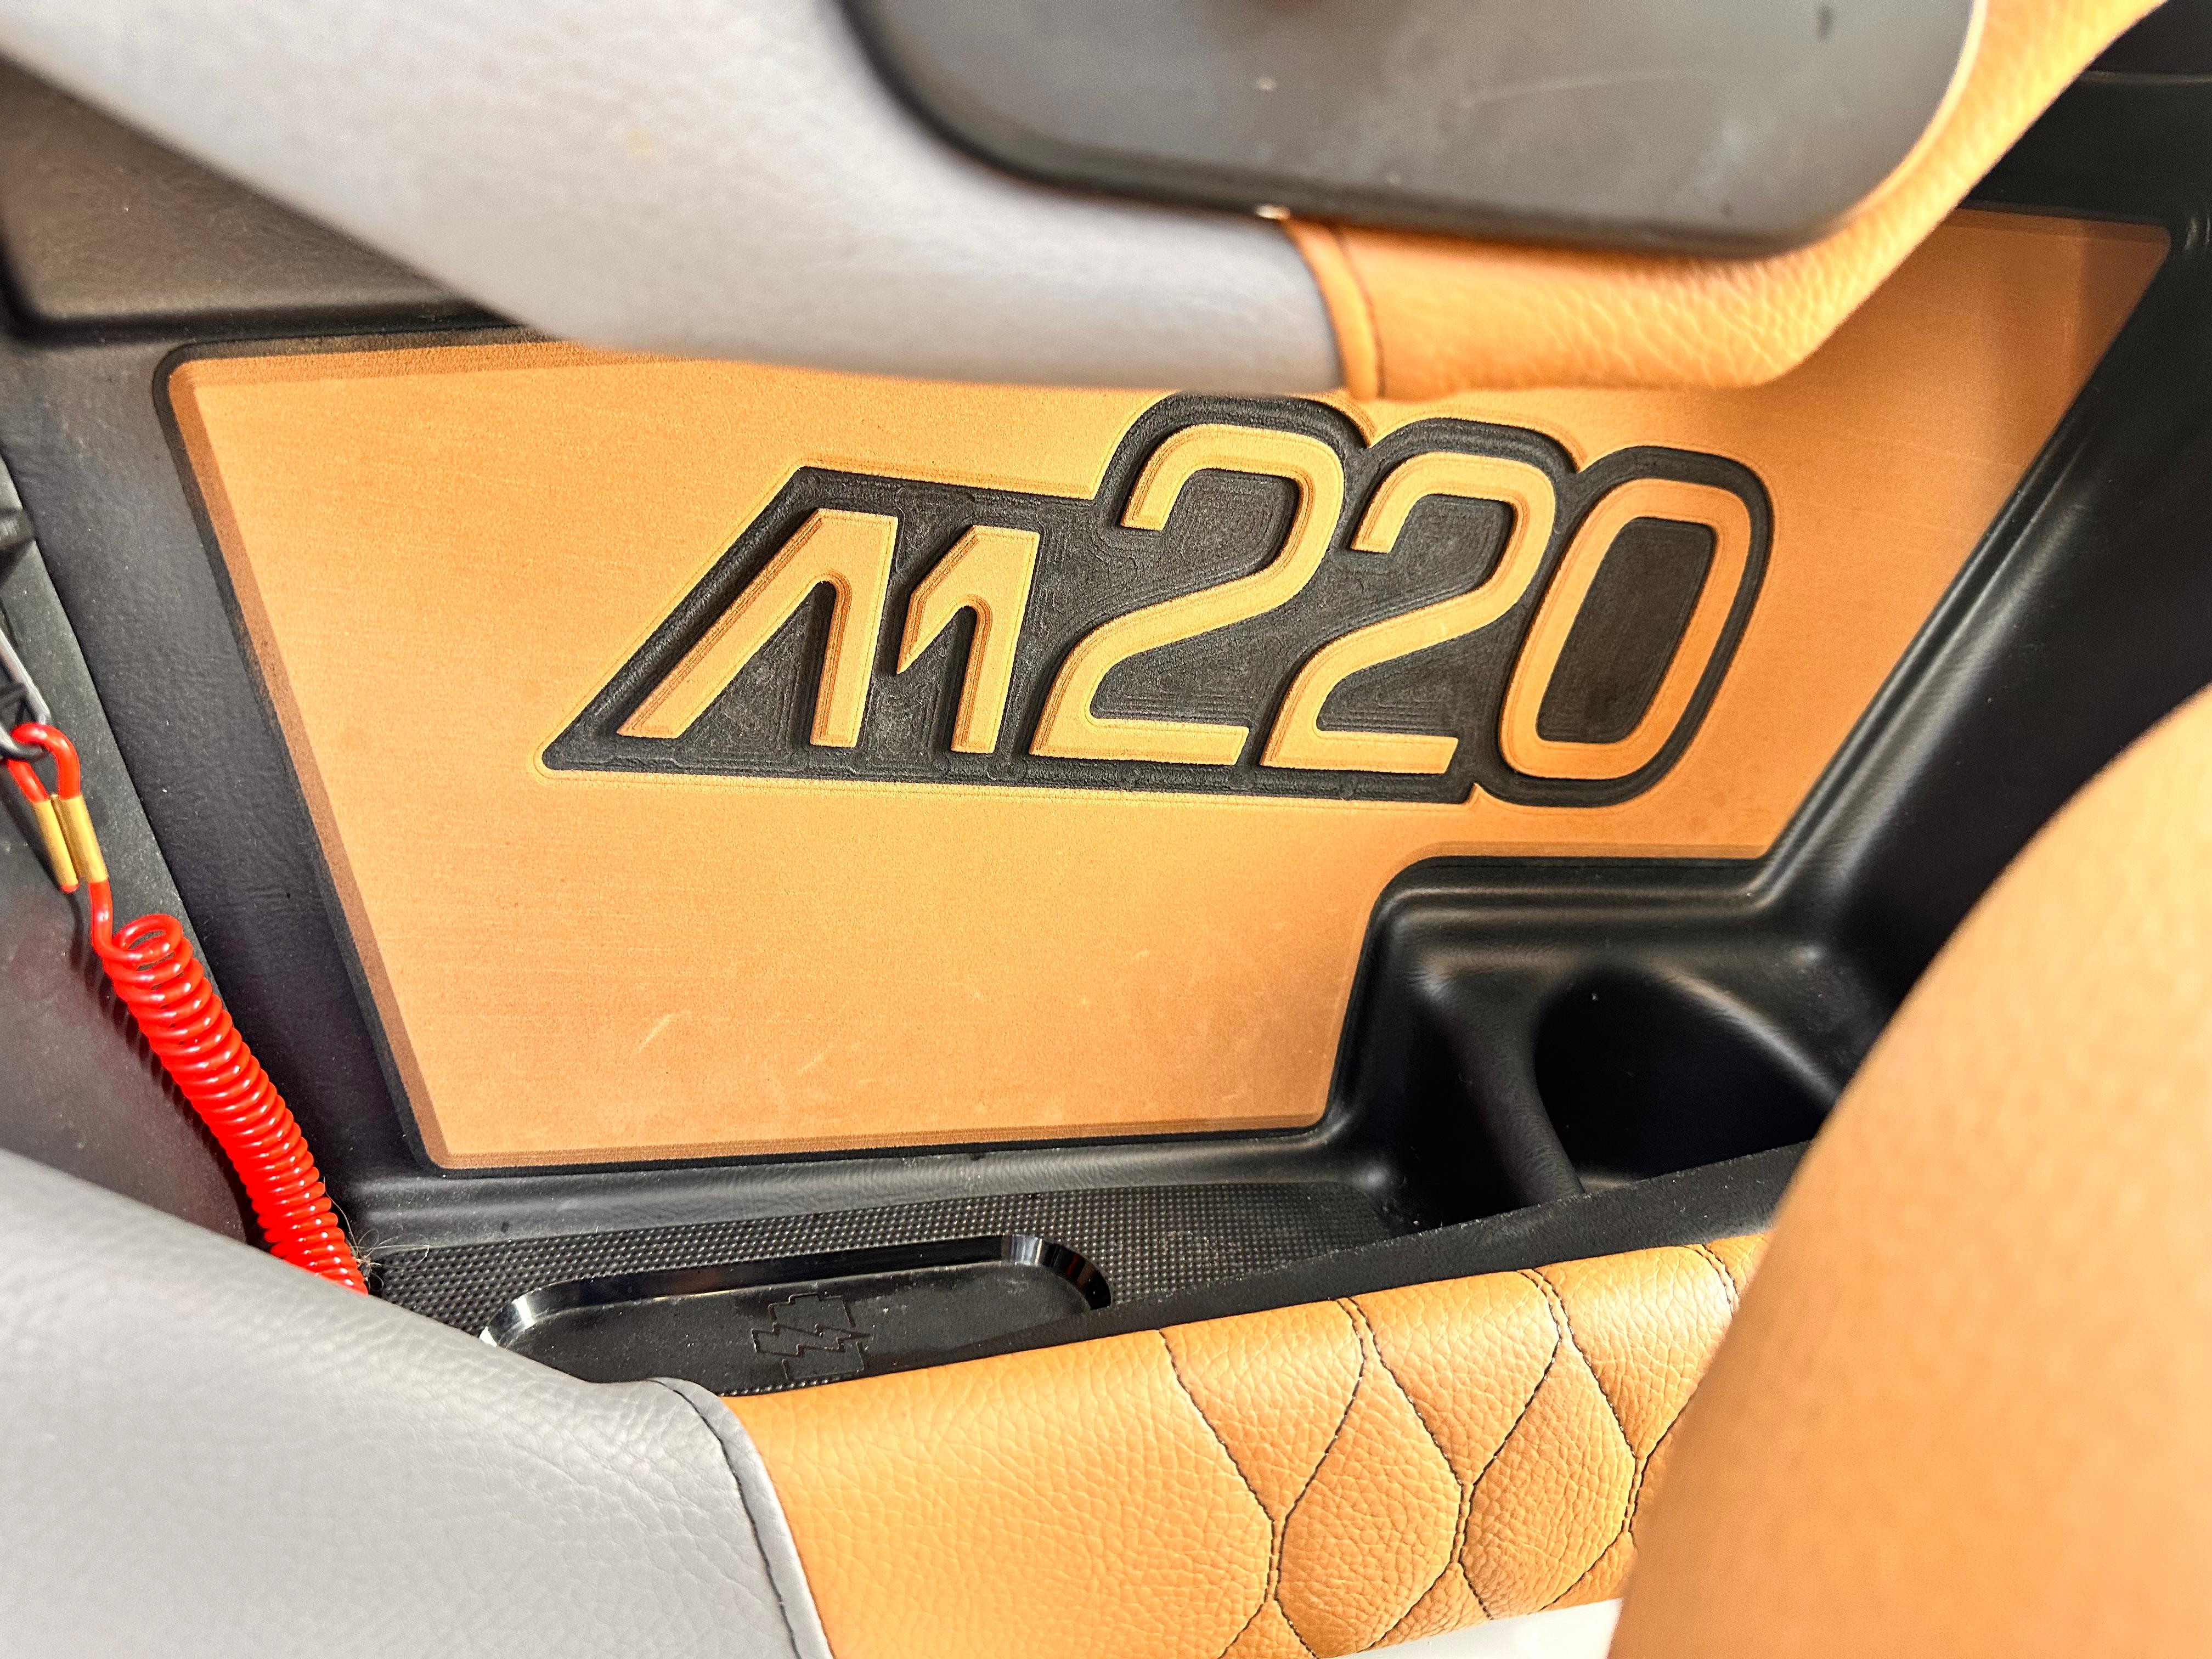 2022 Malibu M220